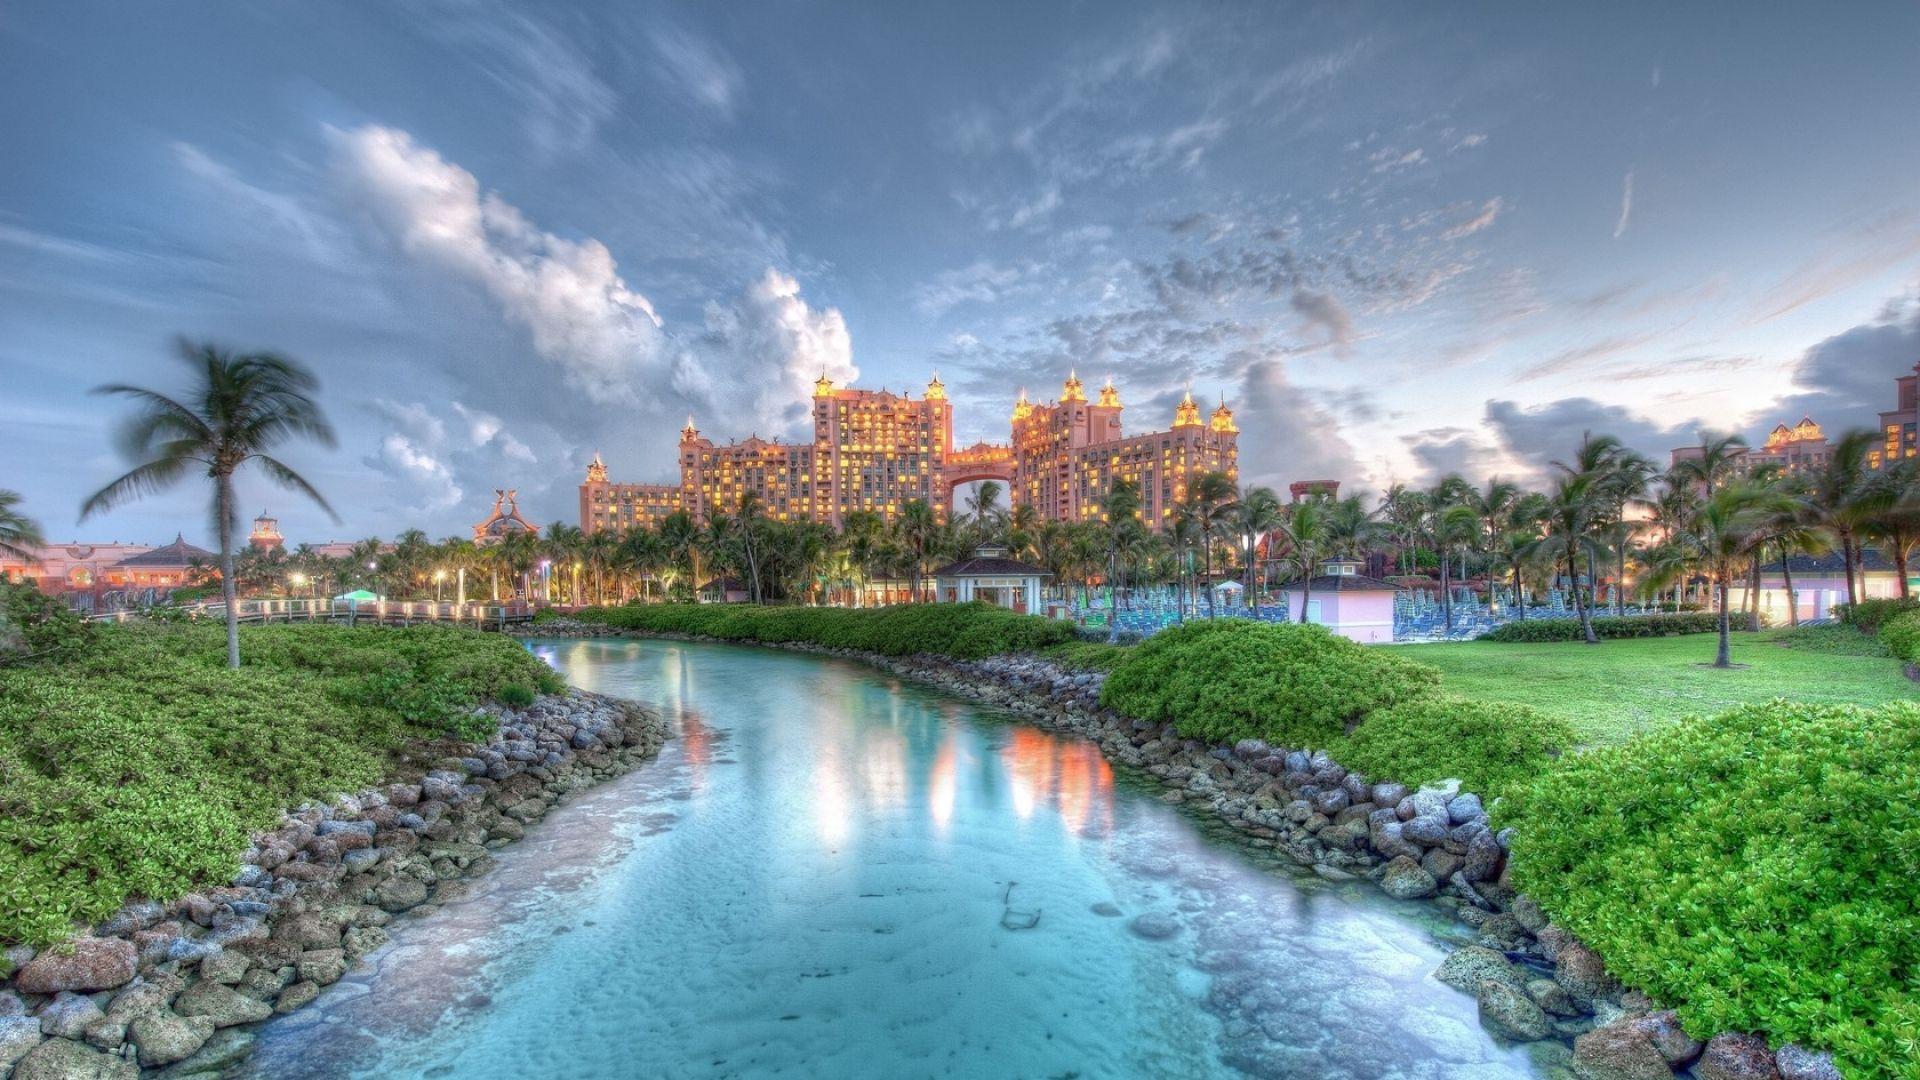 Download Wallpapers Nassau, Atlantis hotel, Dubai